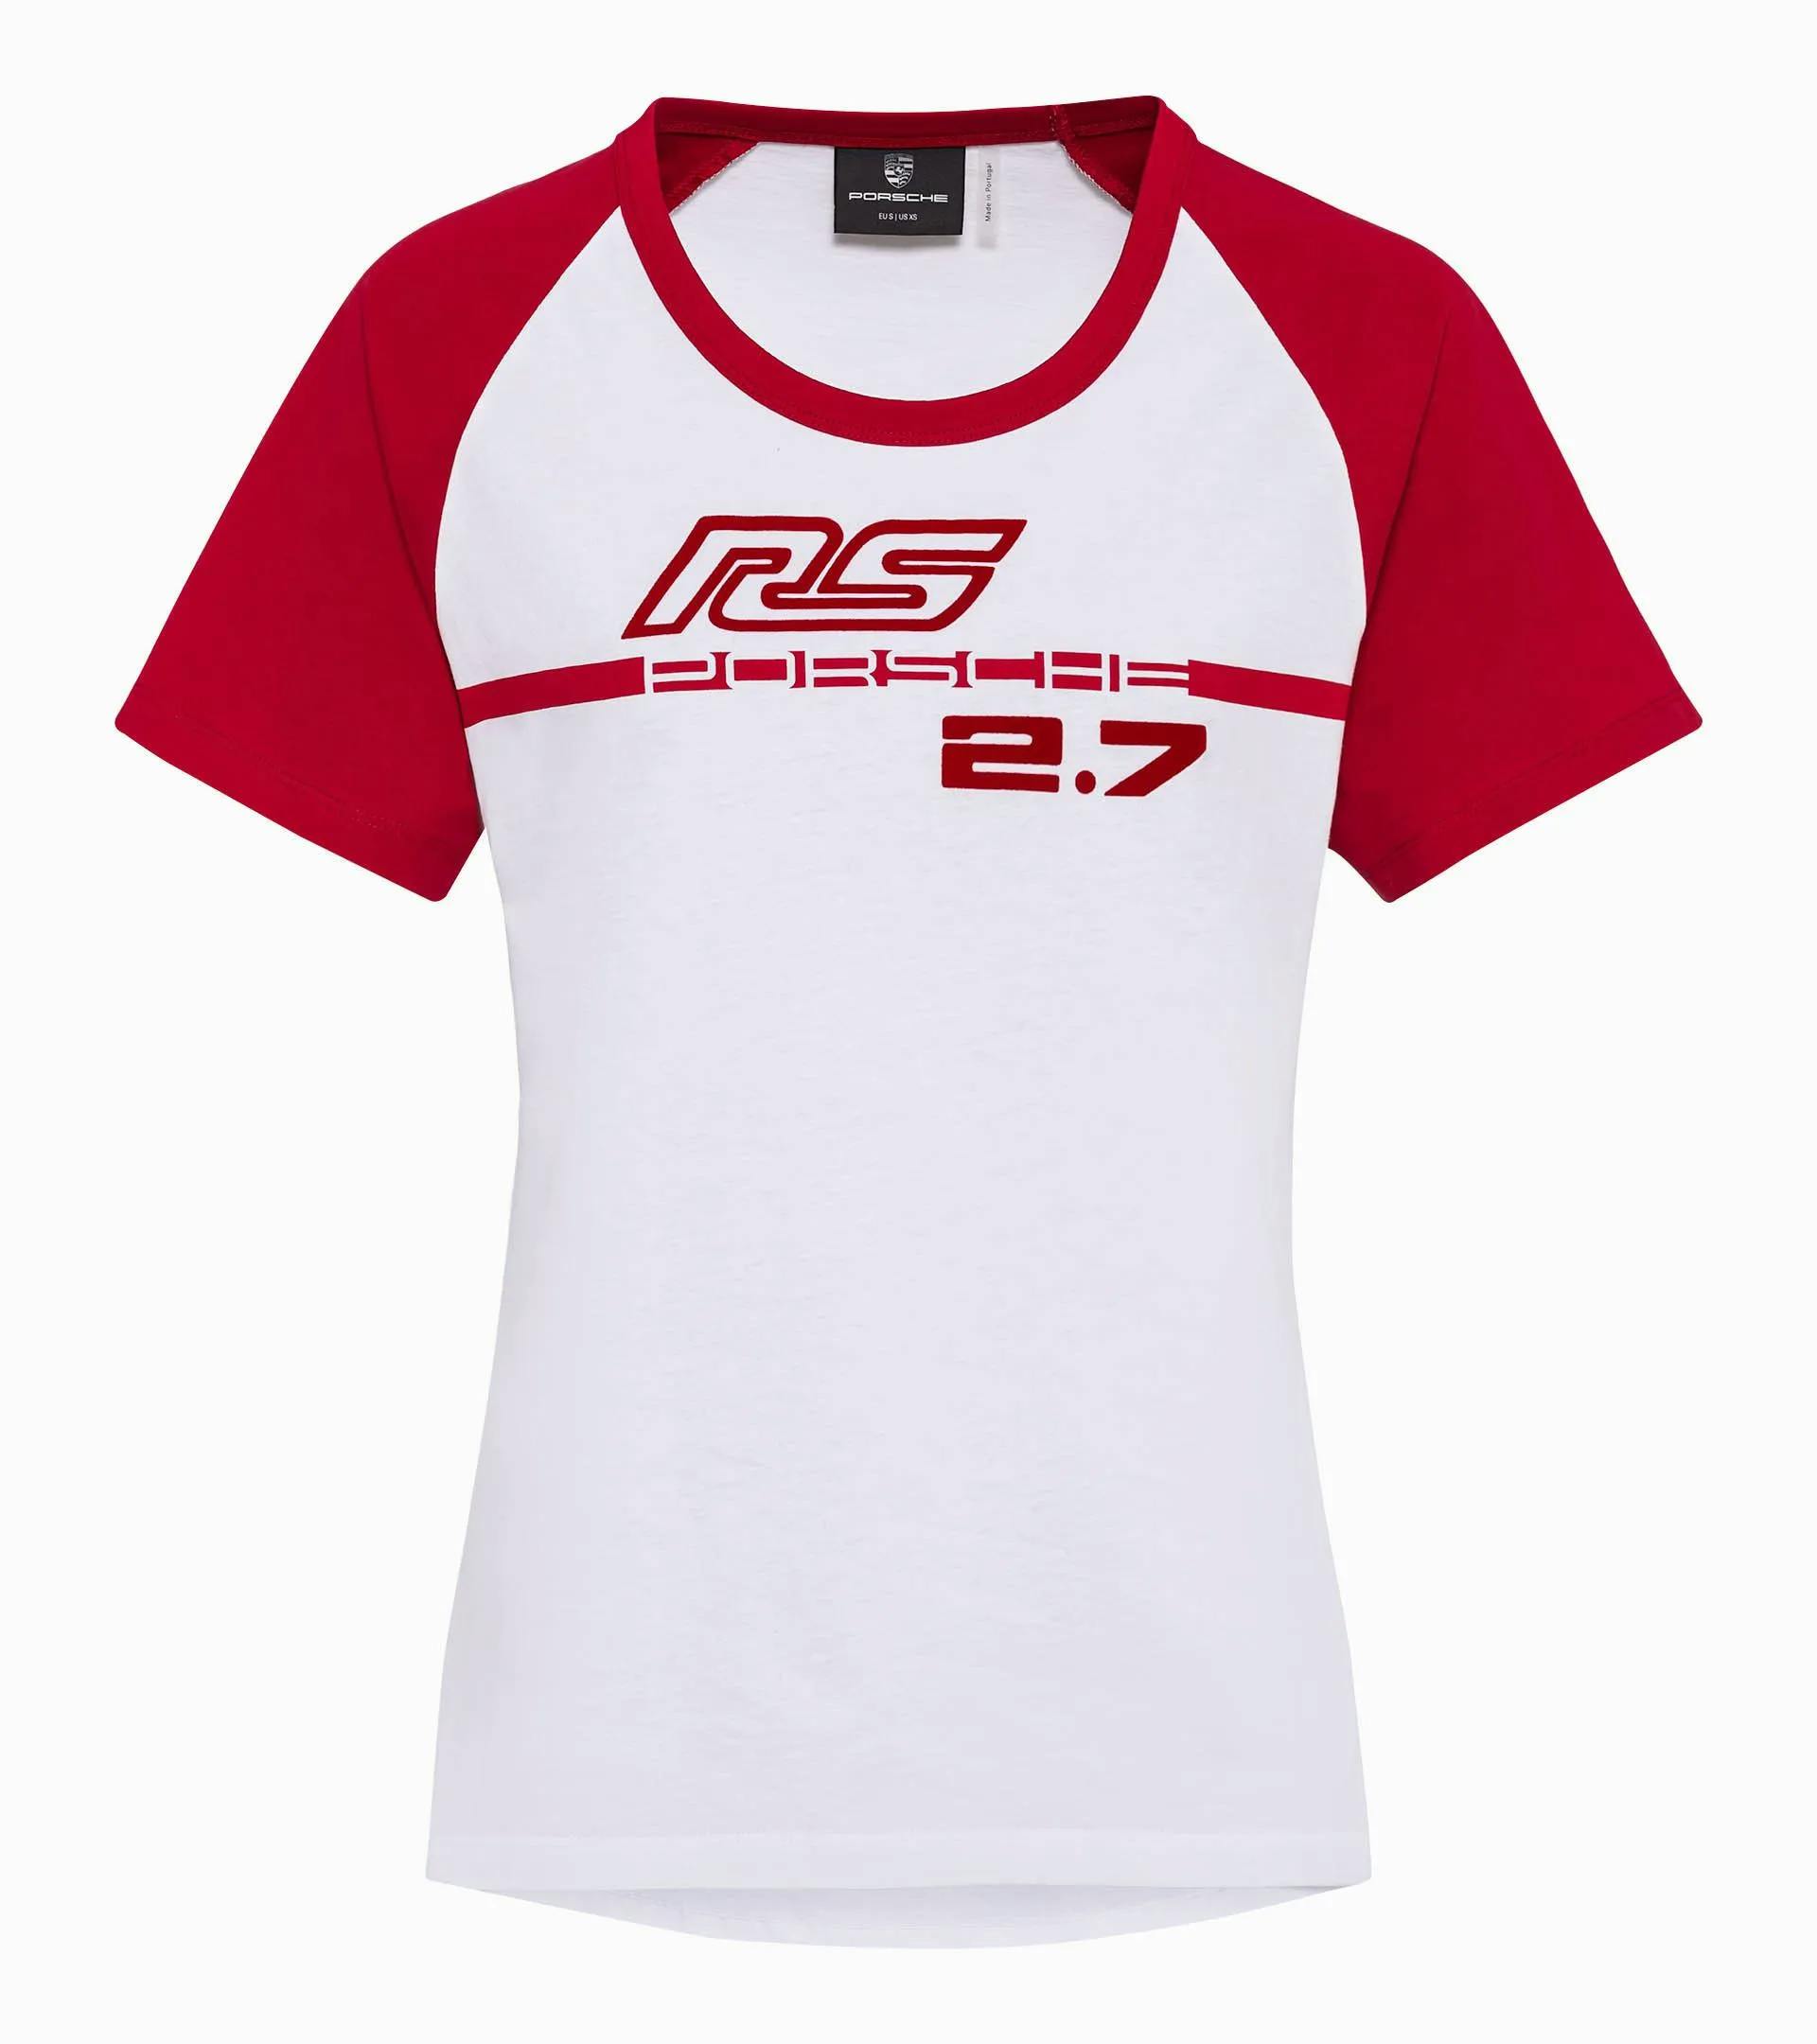 Camiseta para mujer – RS 2.7 1